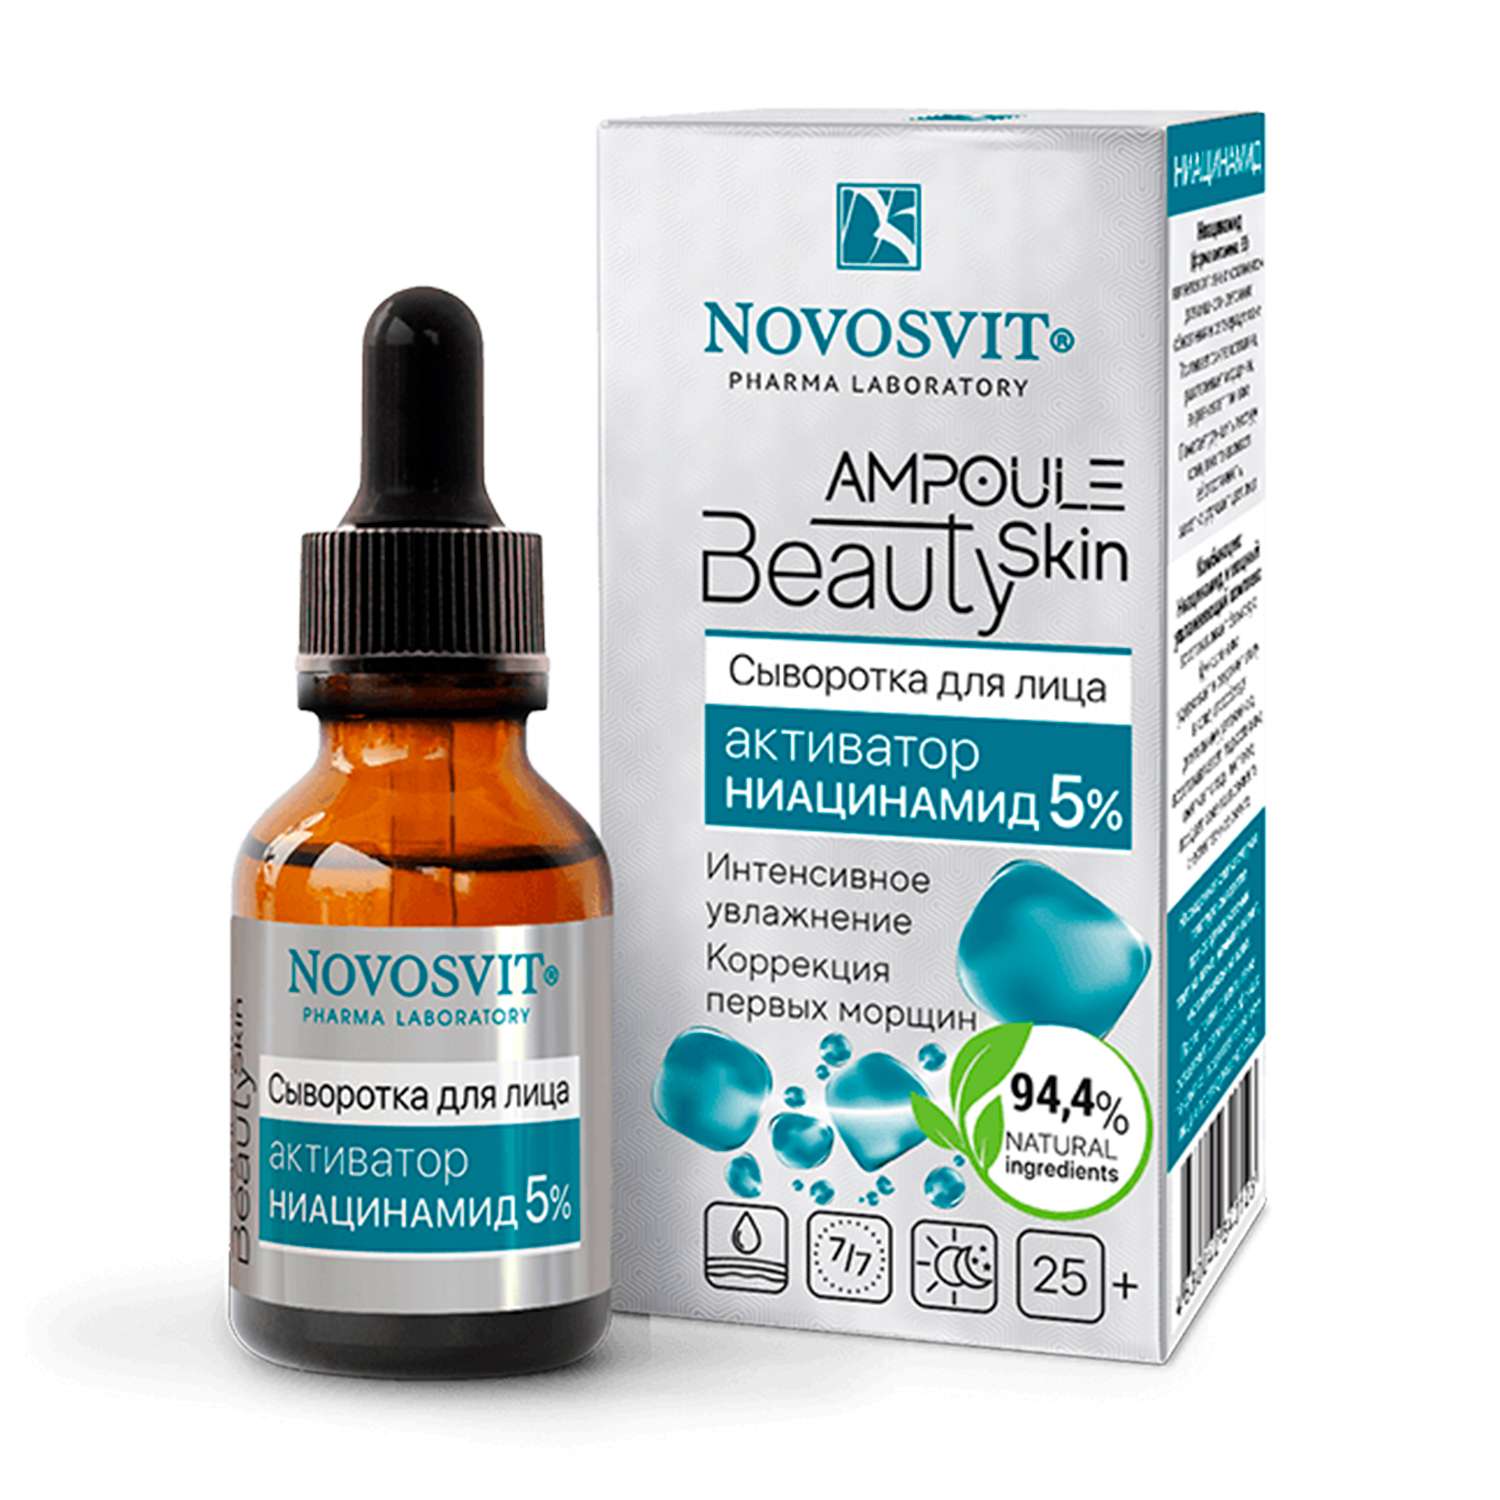 Сыворотка для лица Novosvit «Ampoule Beauty Skin» активатор Ниацинамид 5% - фото 1